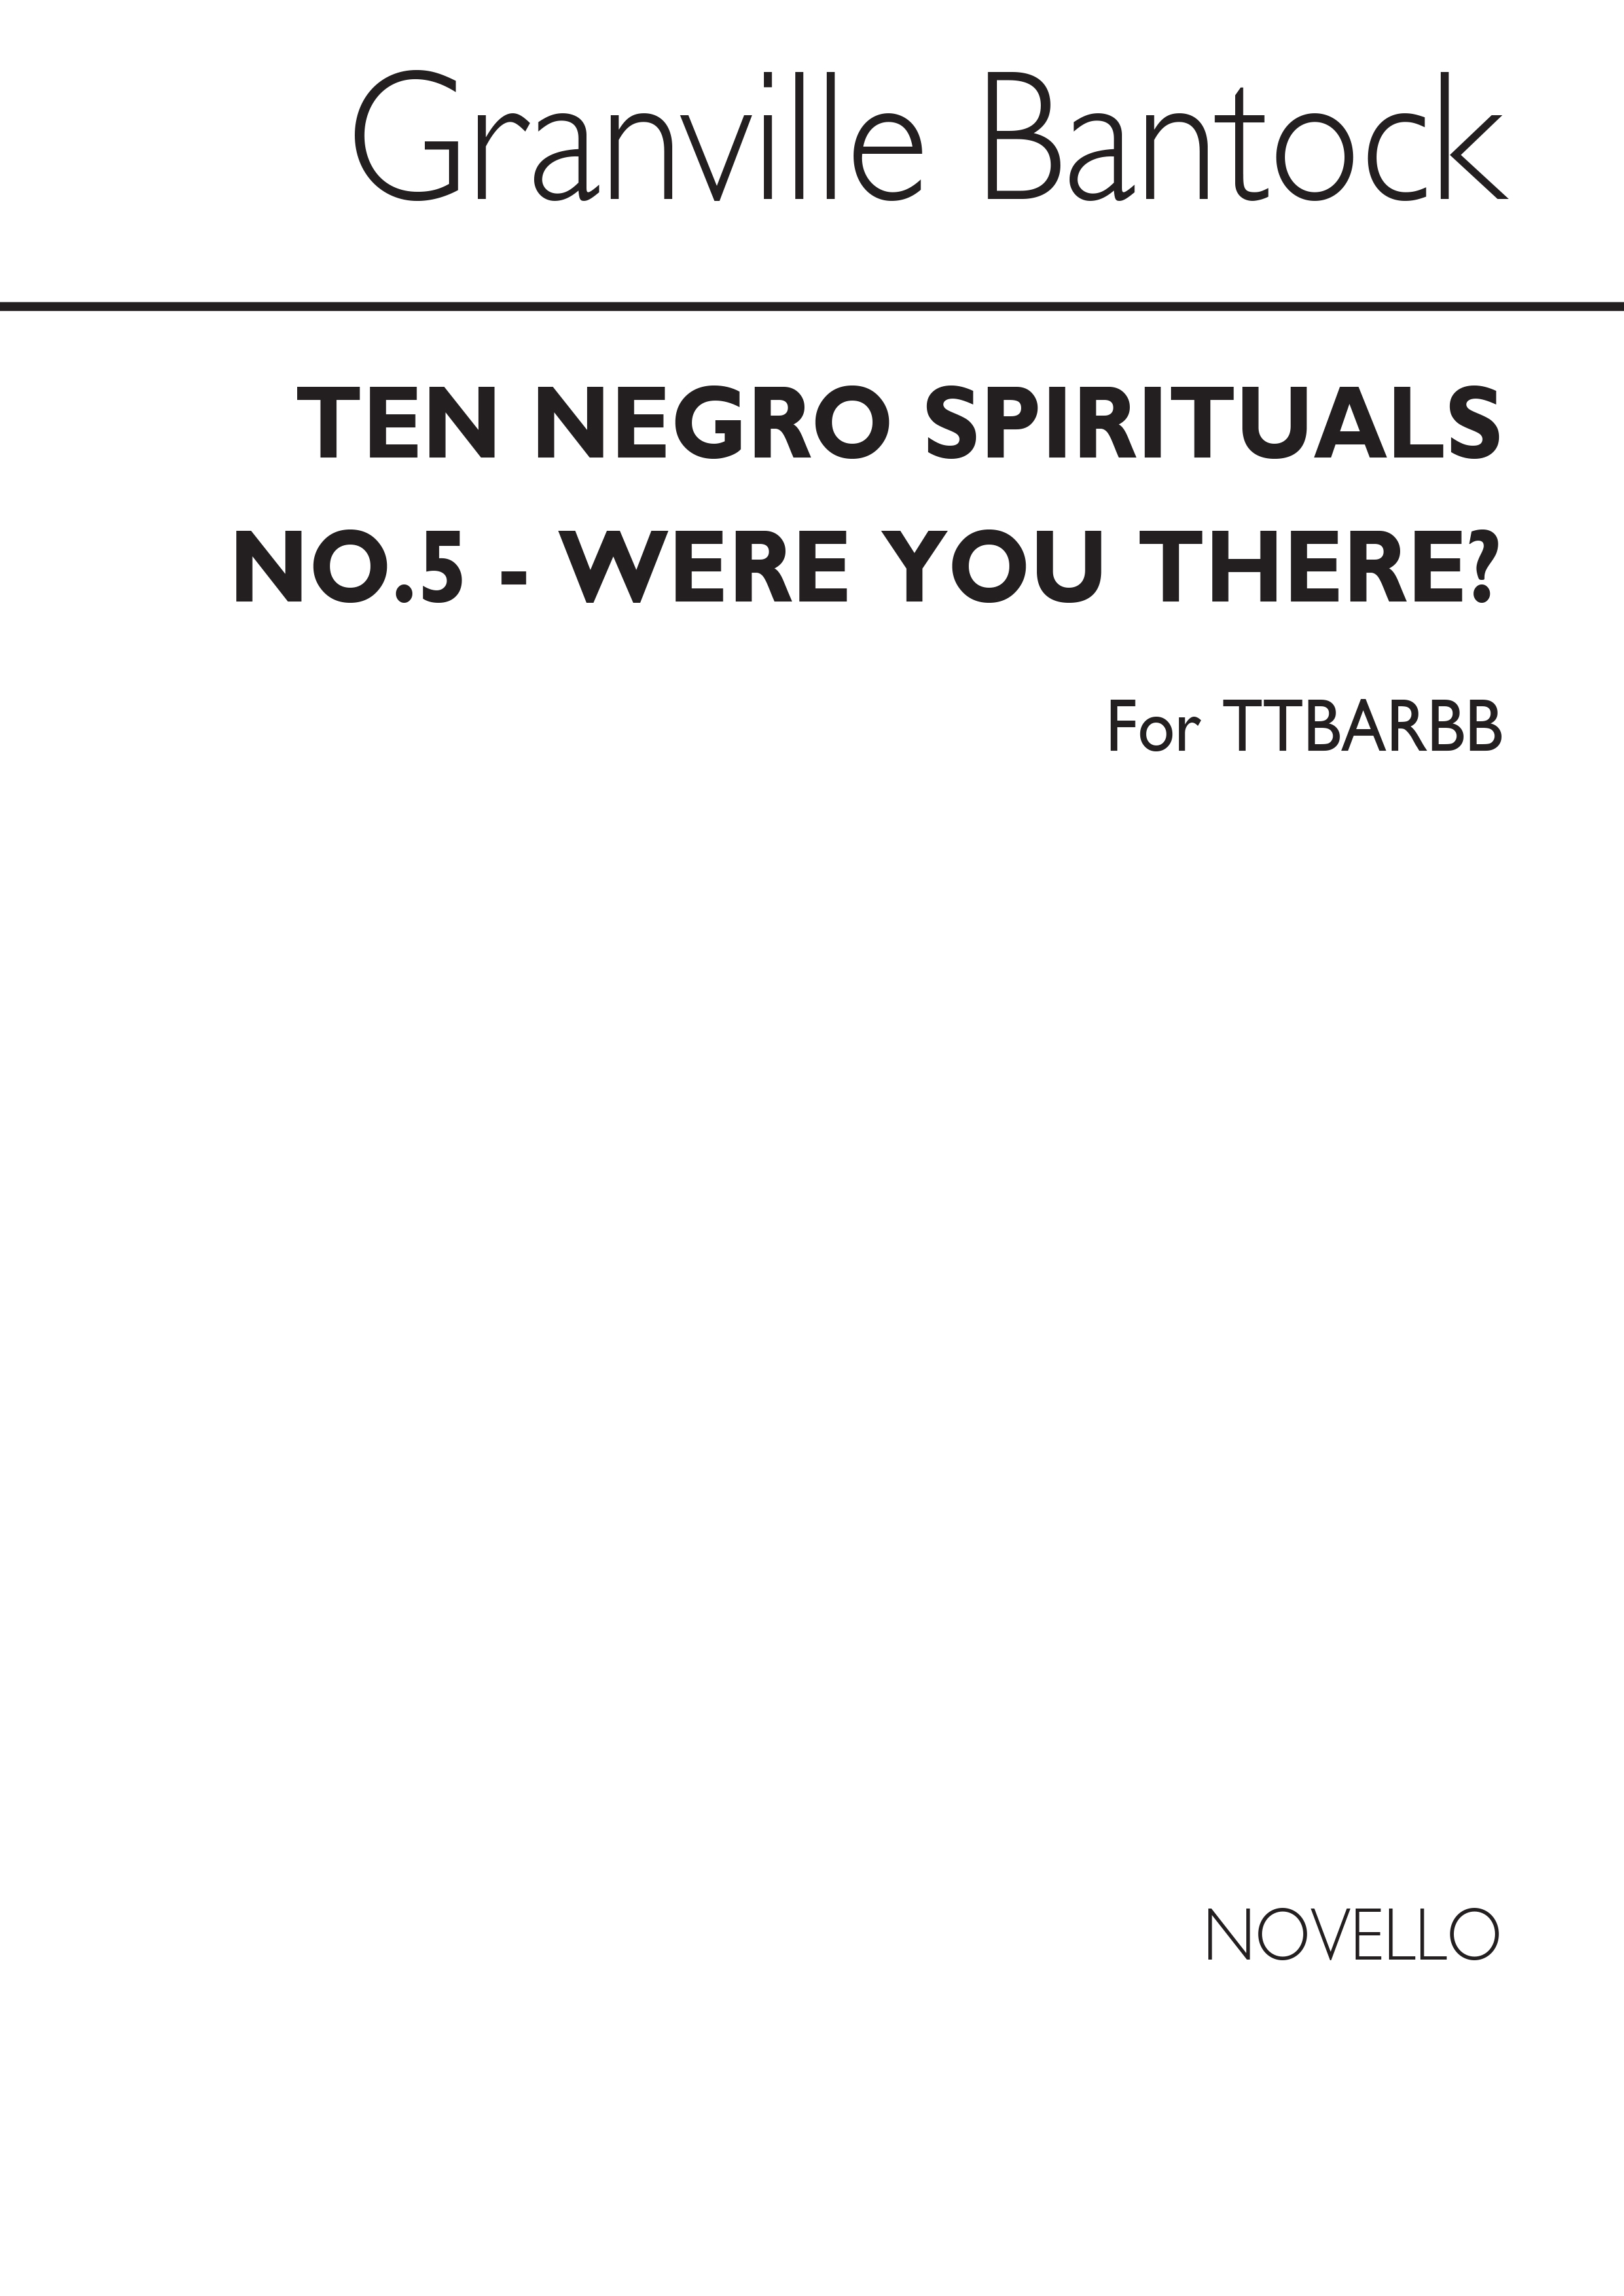 Granville Bantock: Were You There (No 5 From 'Ten Negro Sprirituals'): Men's